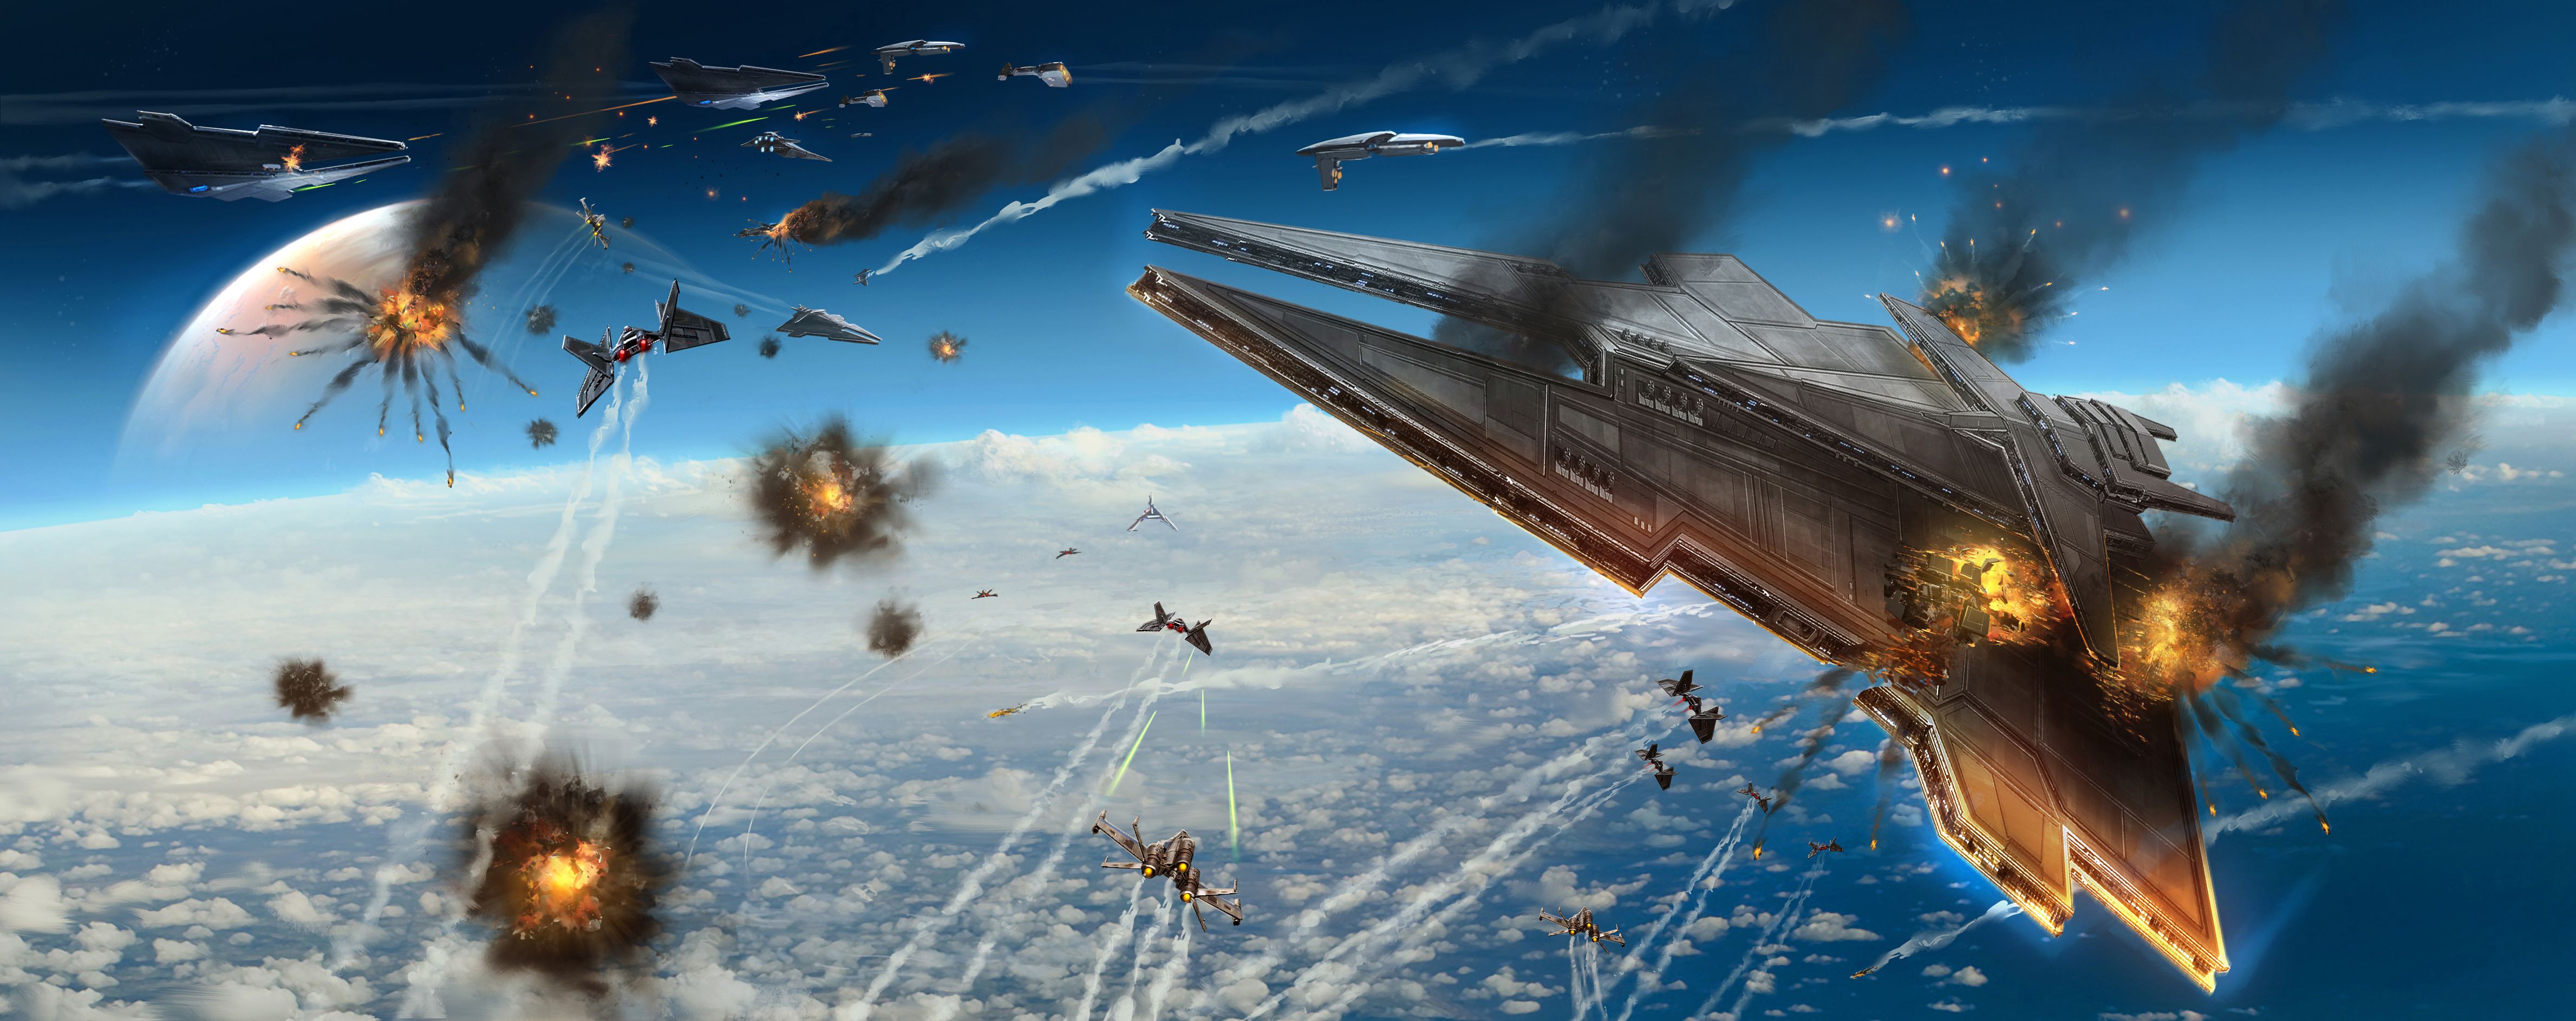 Star Wars Space Battle Background On